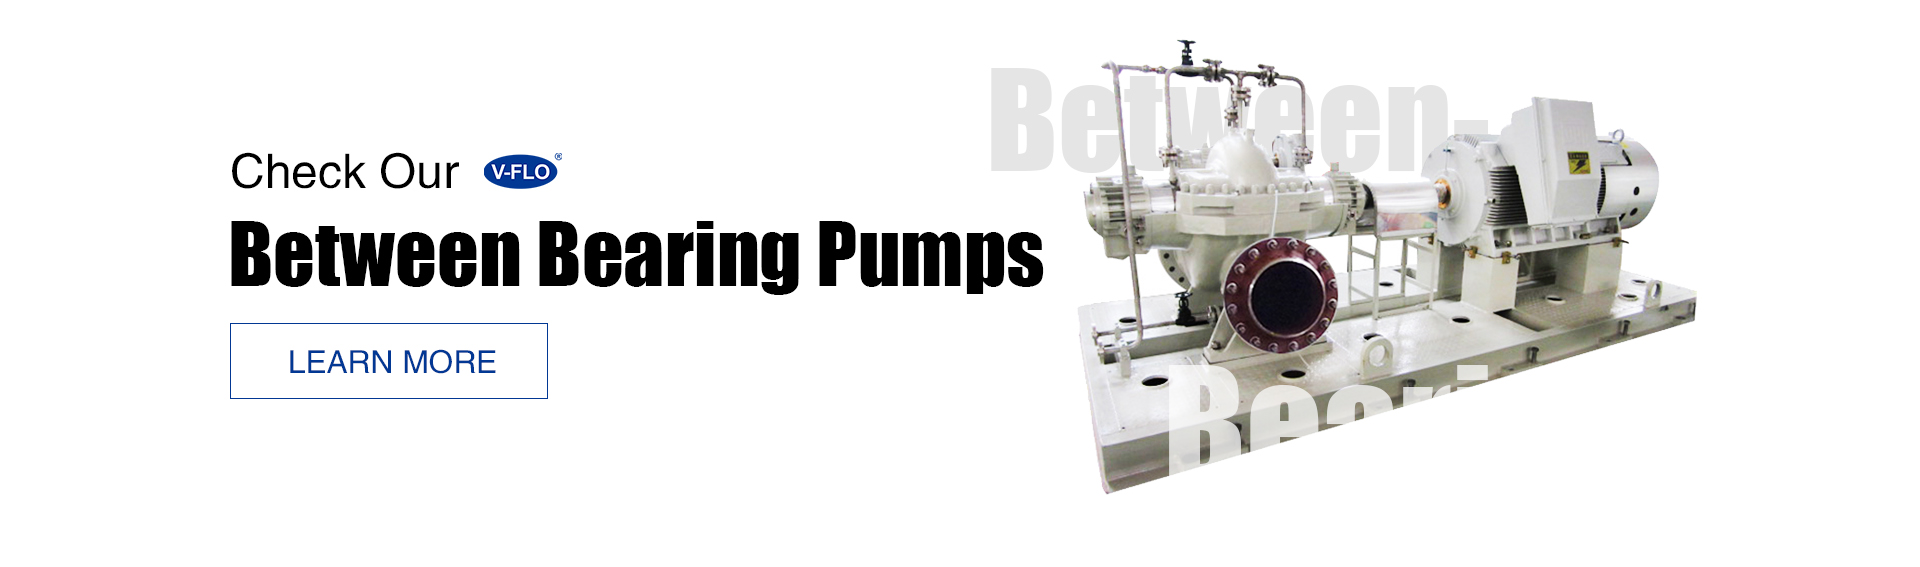 between bearing pumps